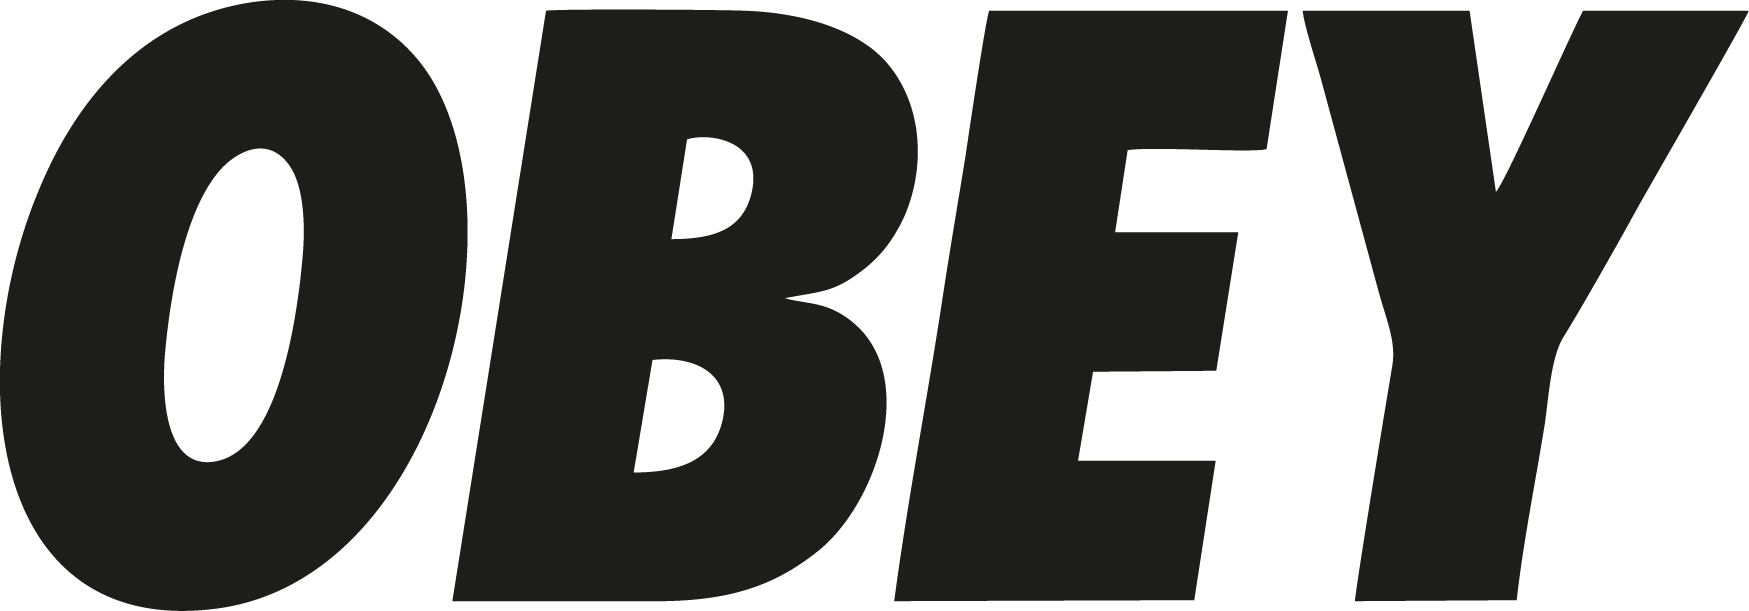 Obey Logo png